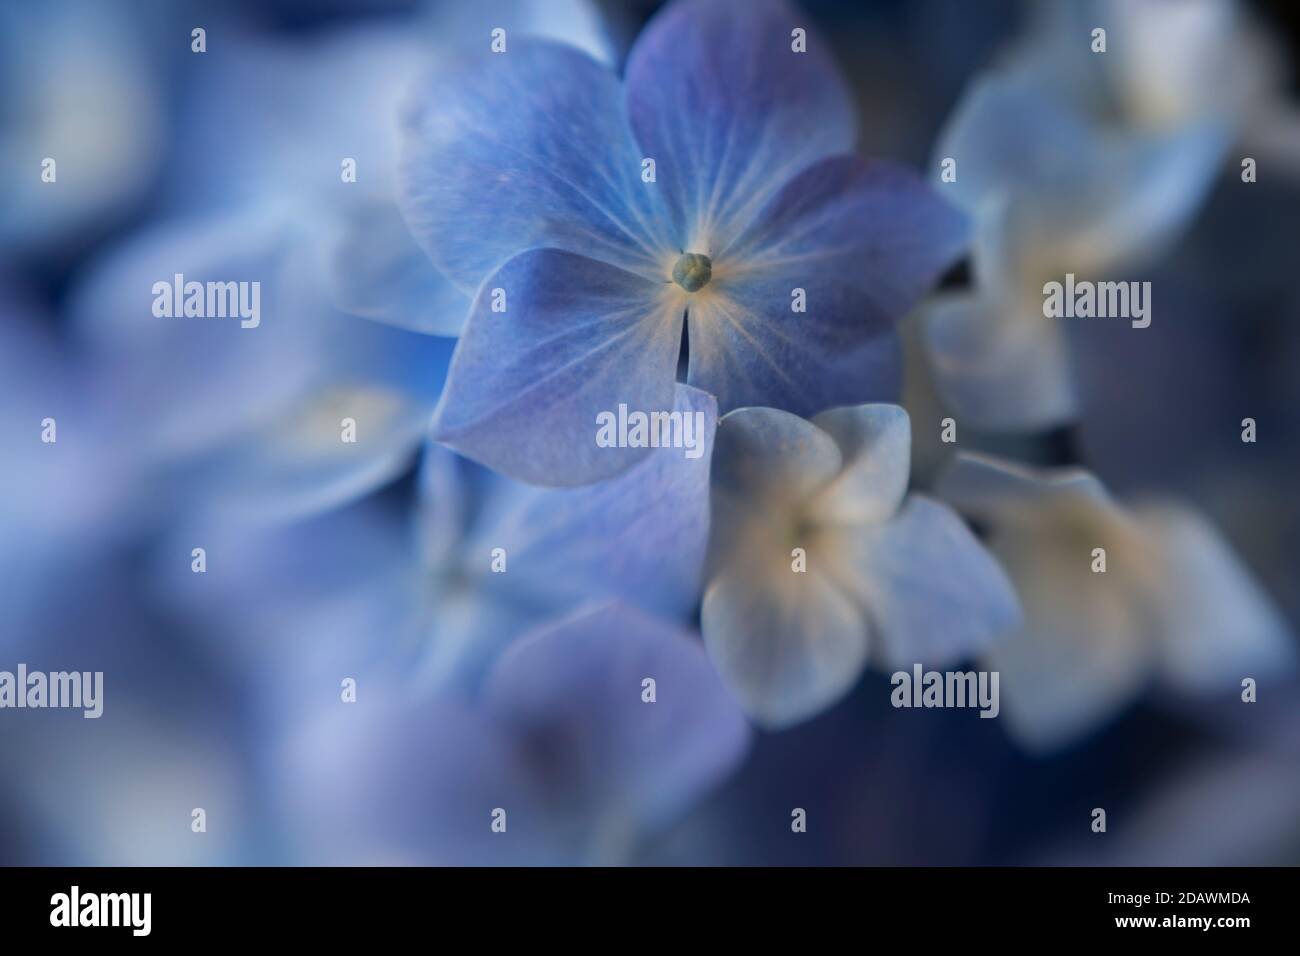 WA18095-00...WASHINGTON - Flowerets of a blue hydrangea. Stock Photo